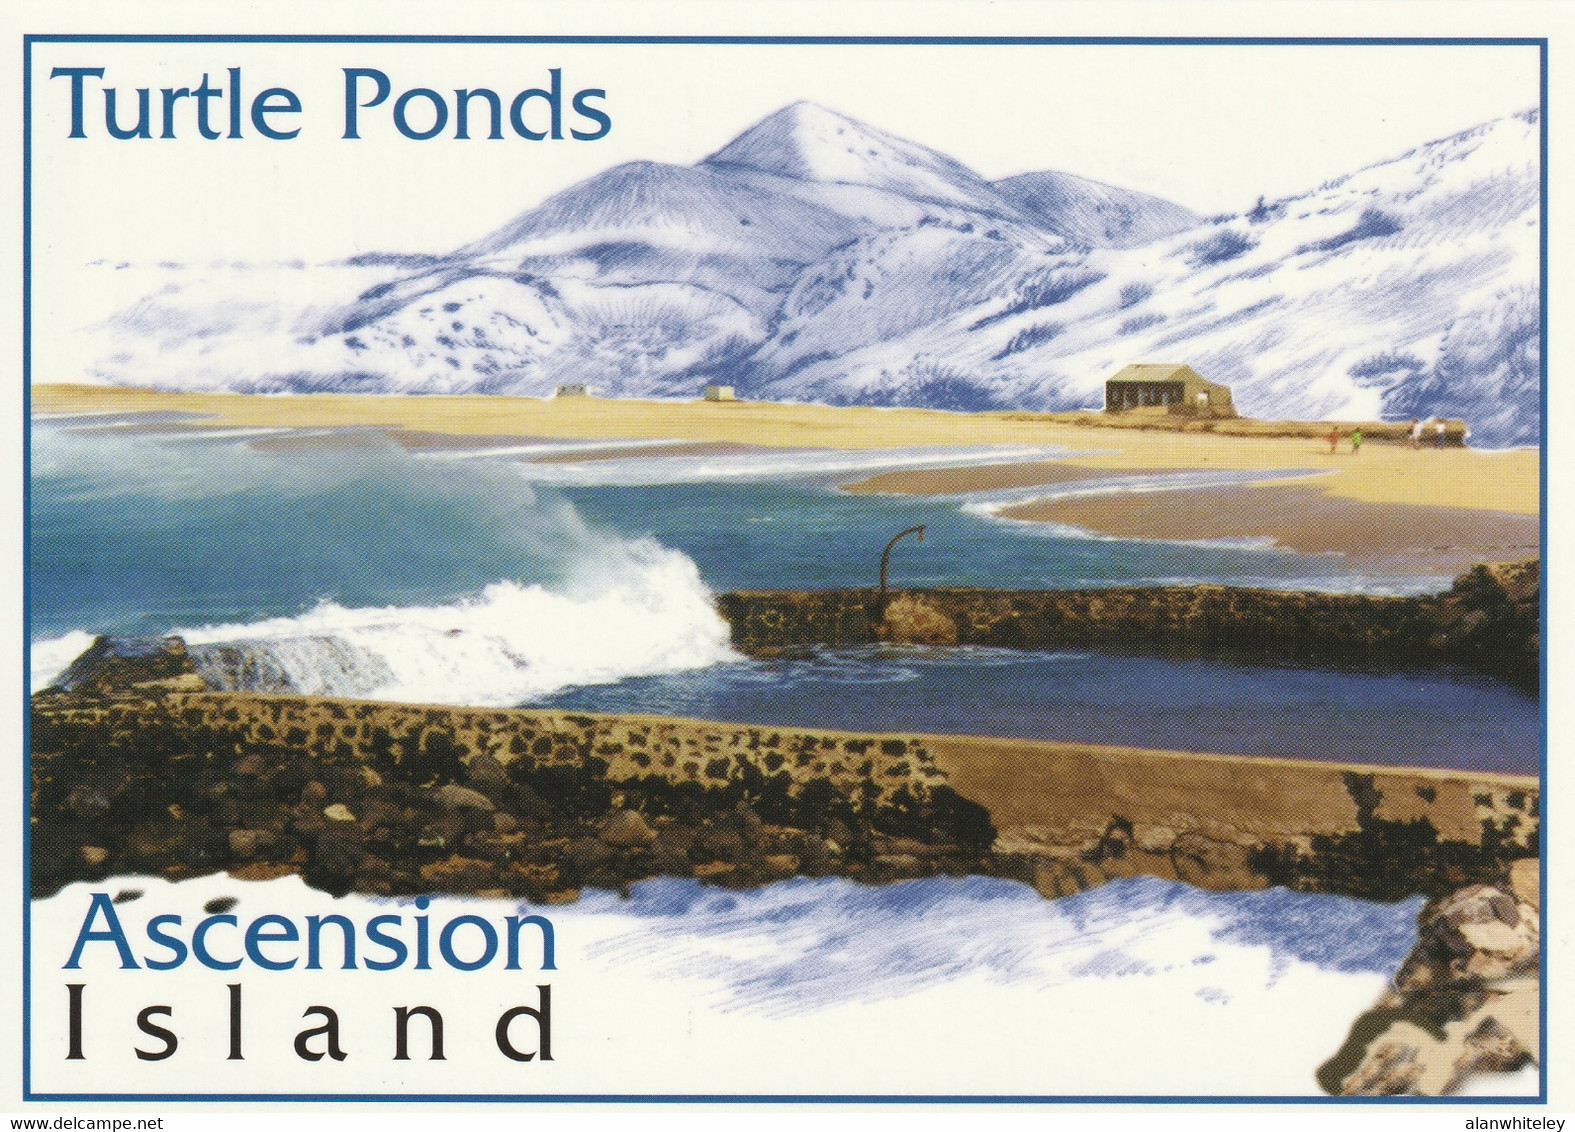 ASCENSION ISLAND 2001 Tourism: Set of 10 Postcards MINT/UNUSED